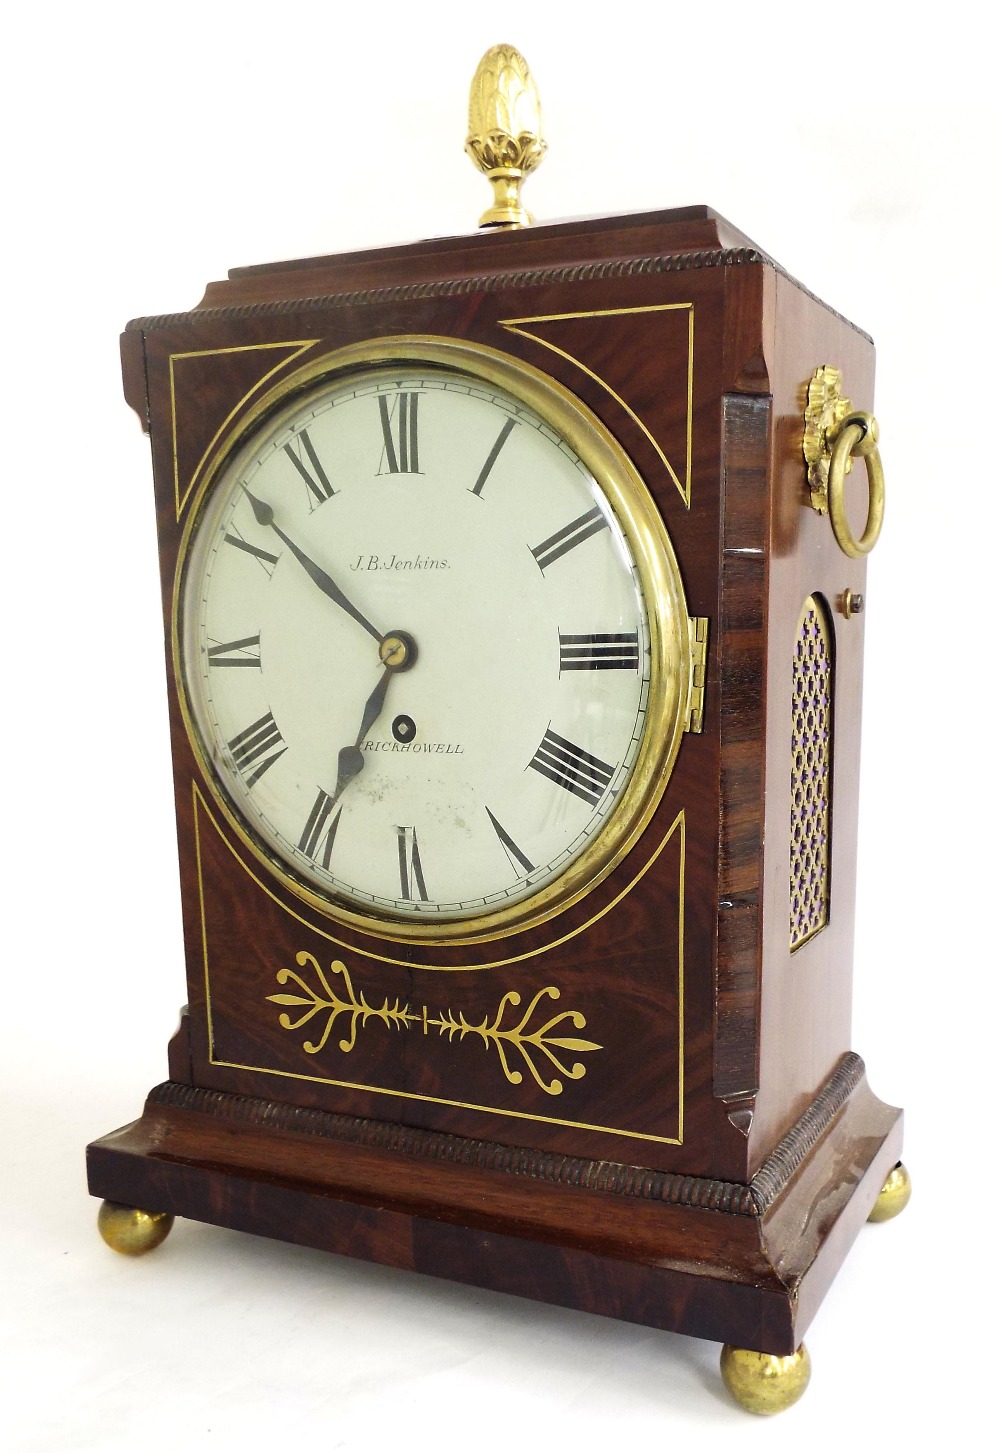 English mahogany single fusee bracket clock, the 8" convex cream dial signed J.B. Jenkins,